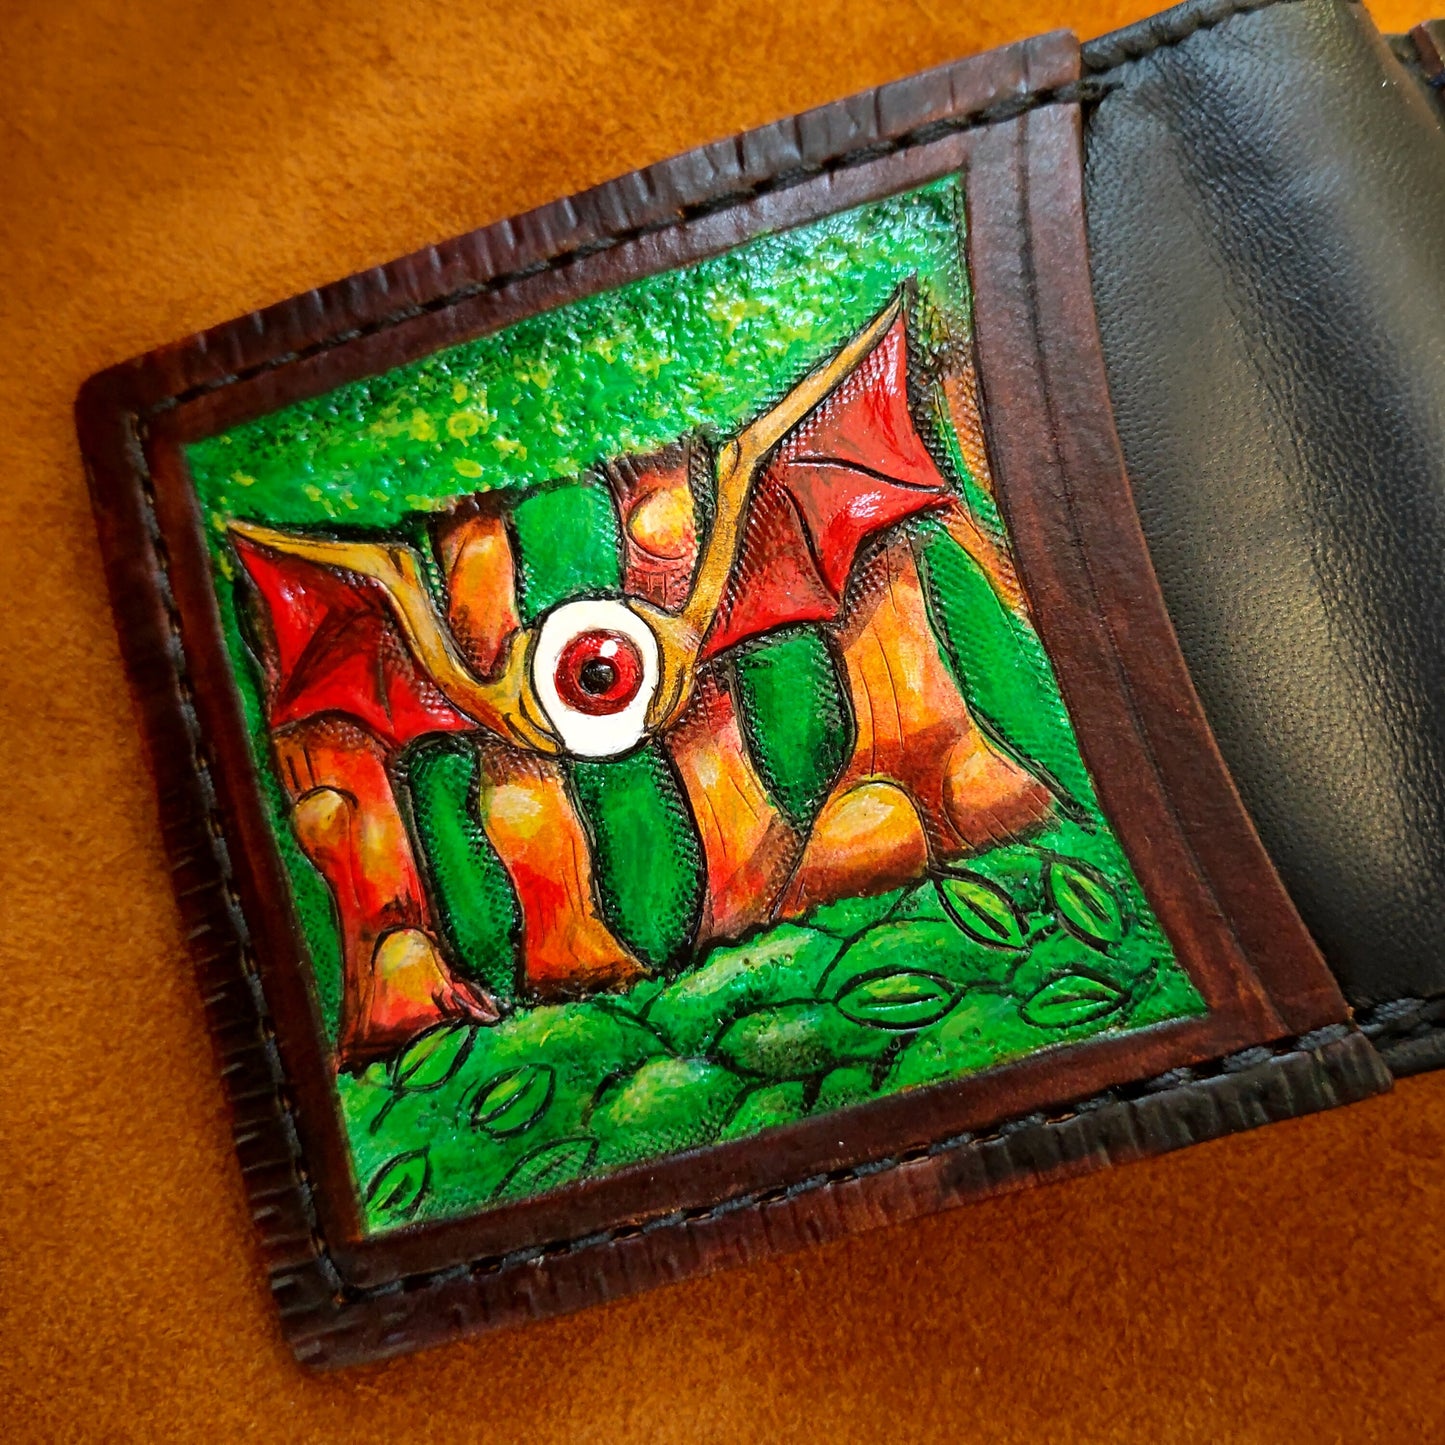 Phantasy Star 1 SMS - Myau - Owlbear - leather wallet- Dark Brown - Leather Bifold Wallet - Handcrafted Wallet - Link Wallet